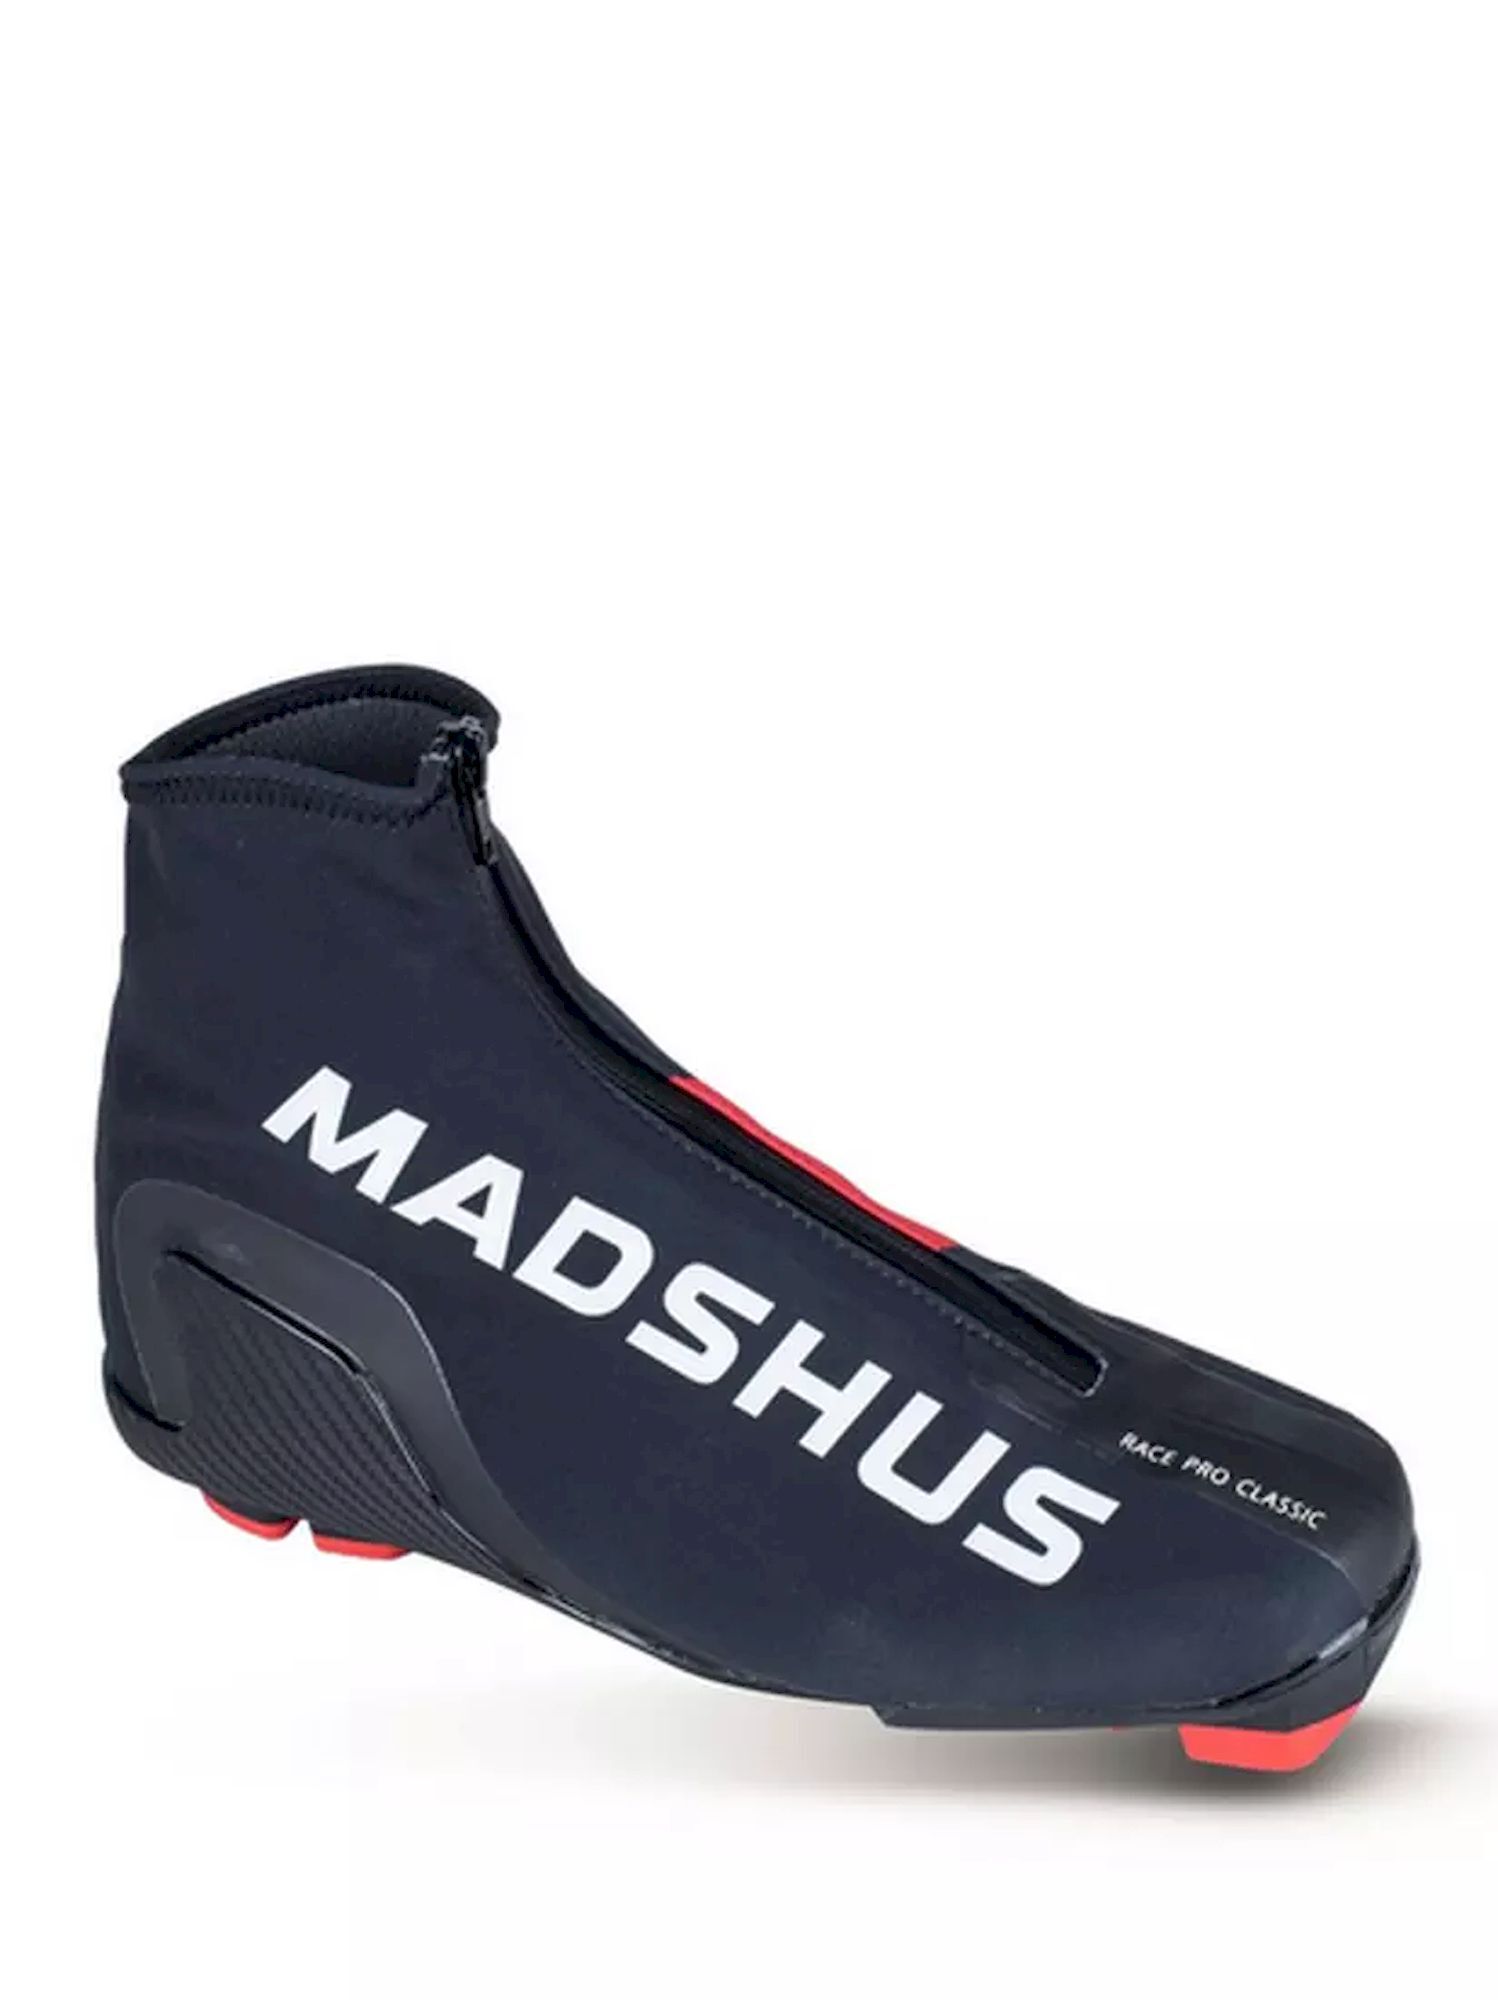 Madshus Race Pro Classic - Langrendsstøvler | Hardloop